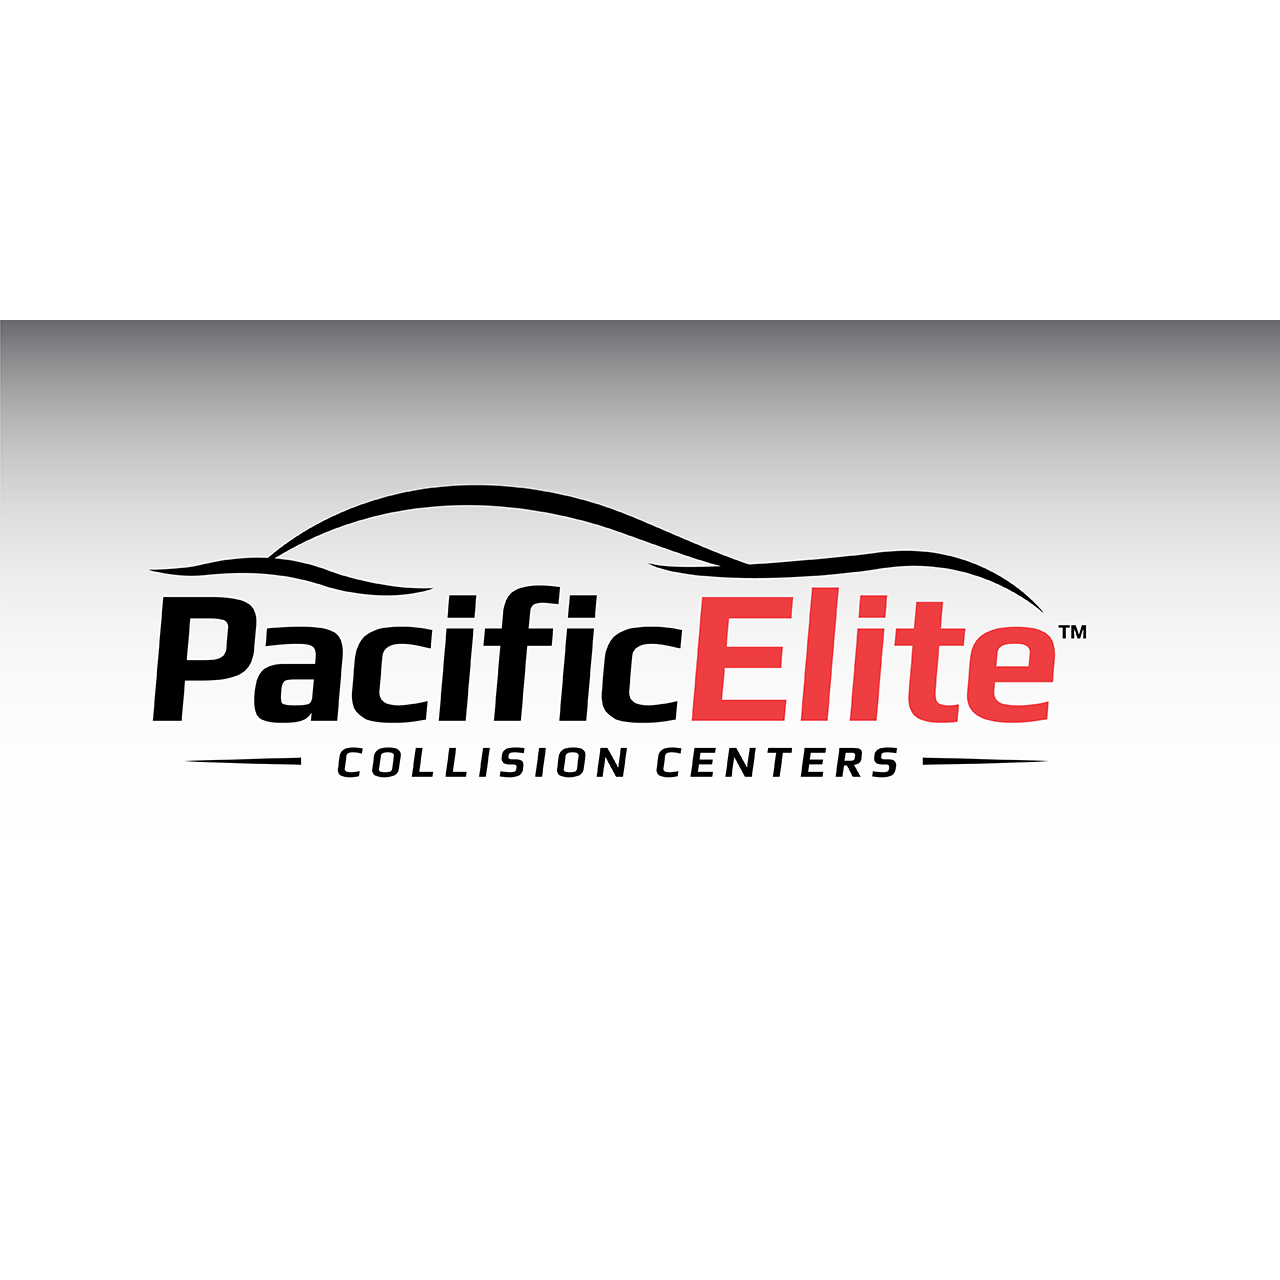 Pacific Elite Collision Centers - Fullerton East Logo